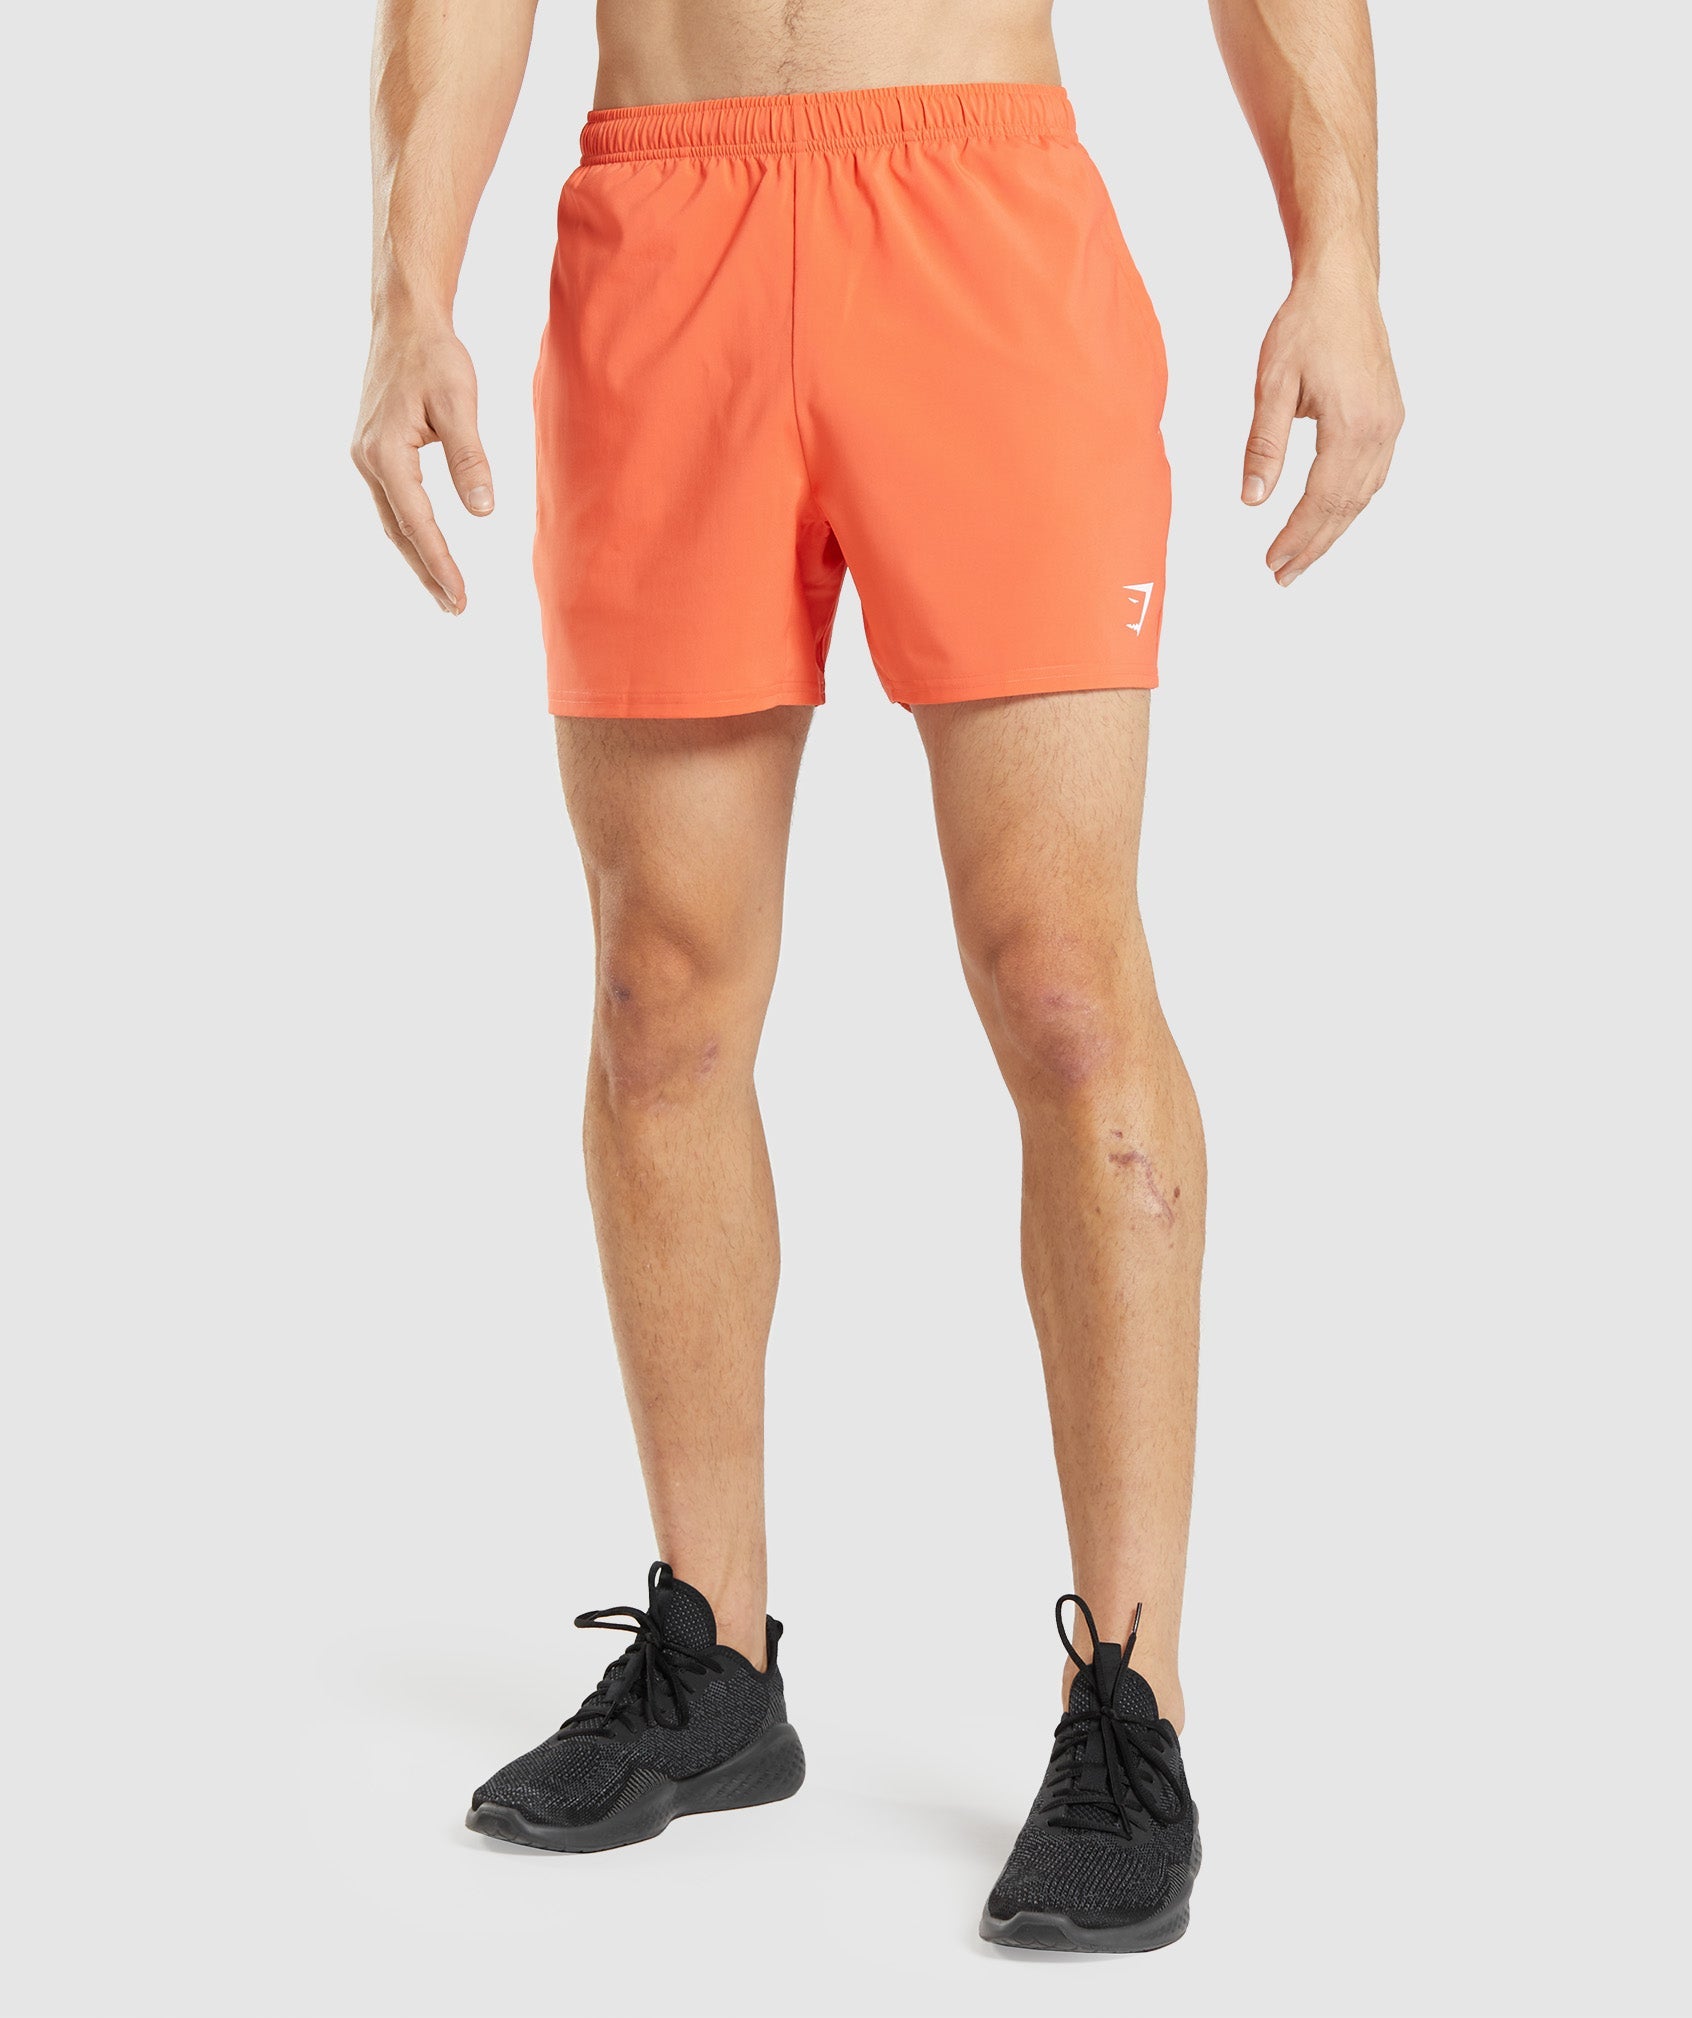 Arrival 5" Shorts in Papaya Orange